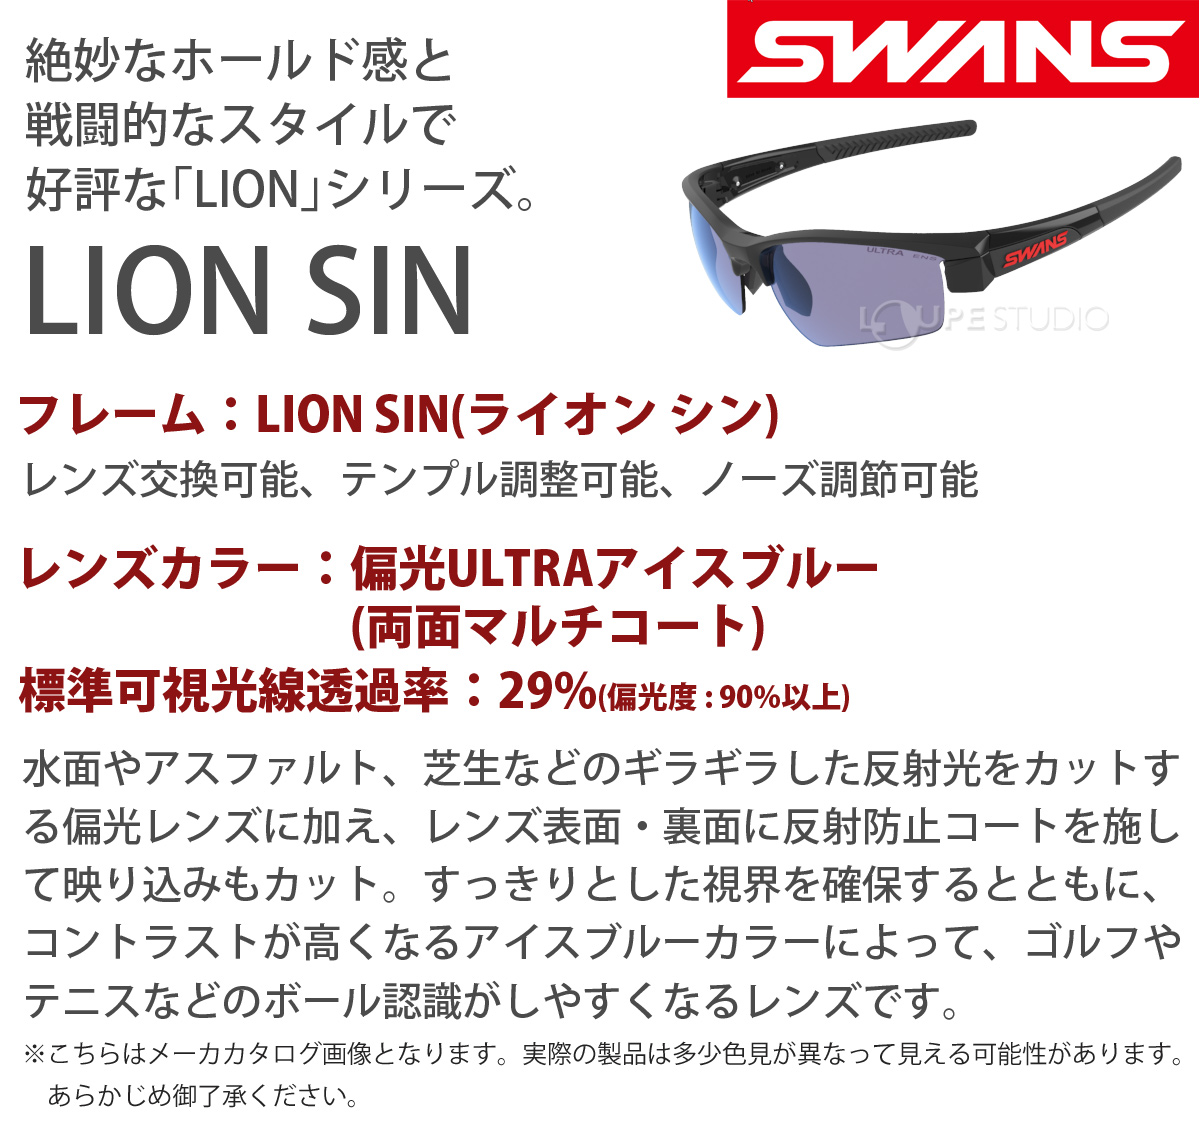 SWANS(スワンズ) スポーツ サングラス ライオンシン AMZ-LI SIN-0001 BK ブラック×ブラック×ブラック